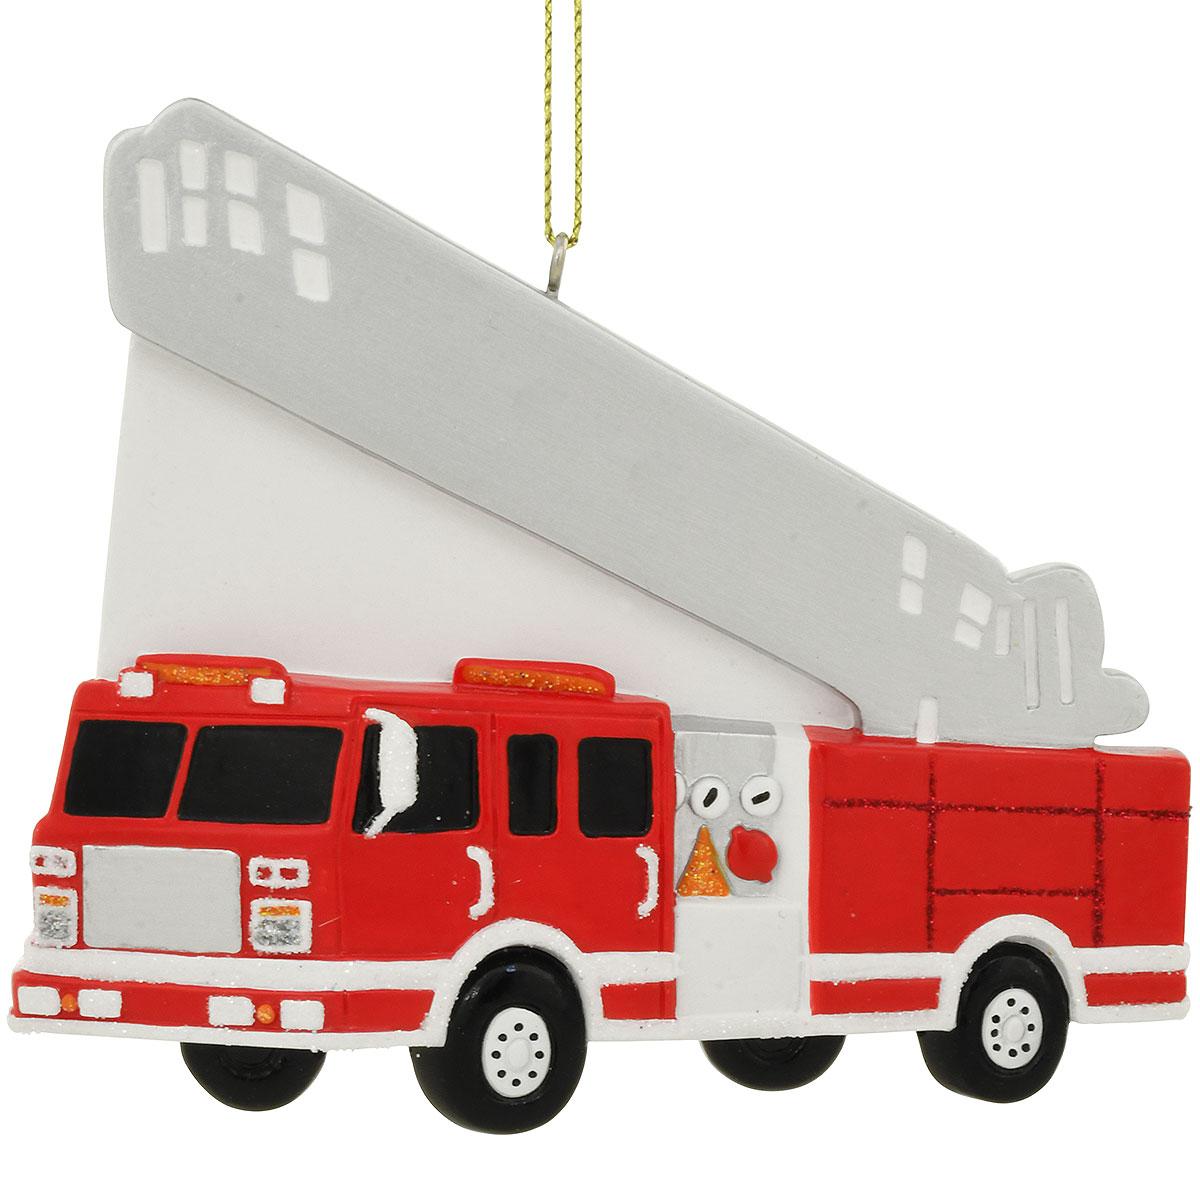 Personalized Fire Truck Ornament